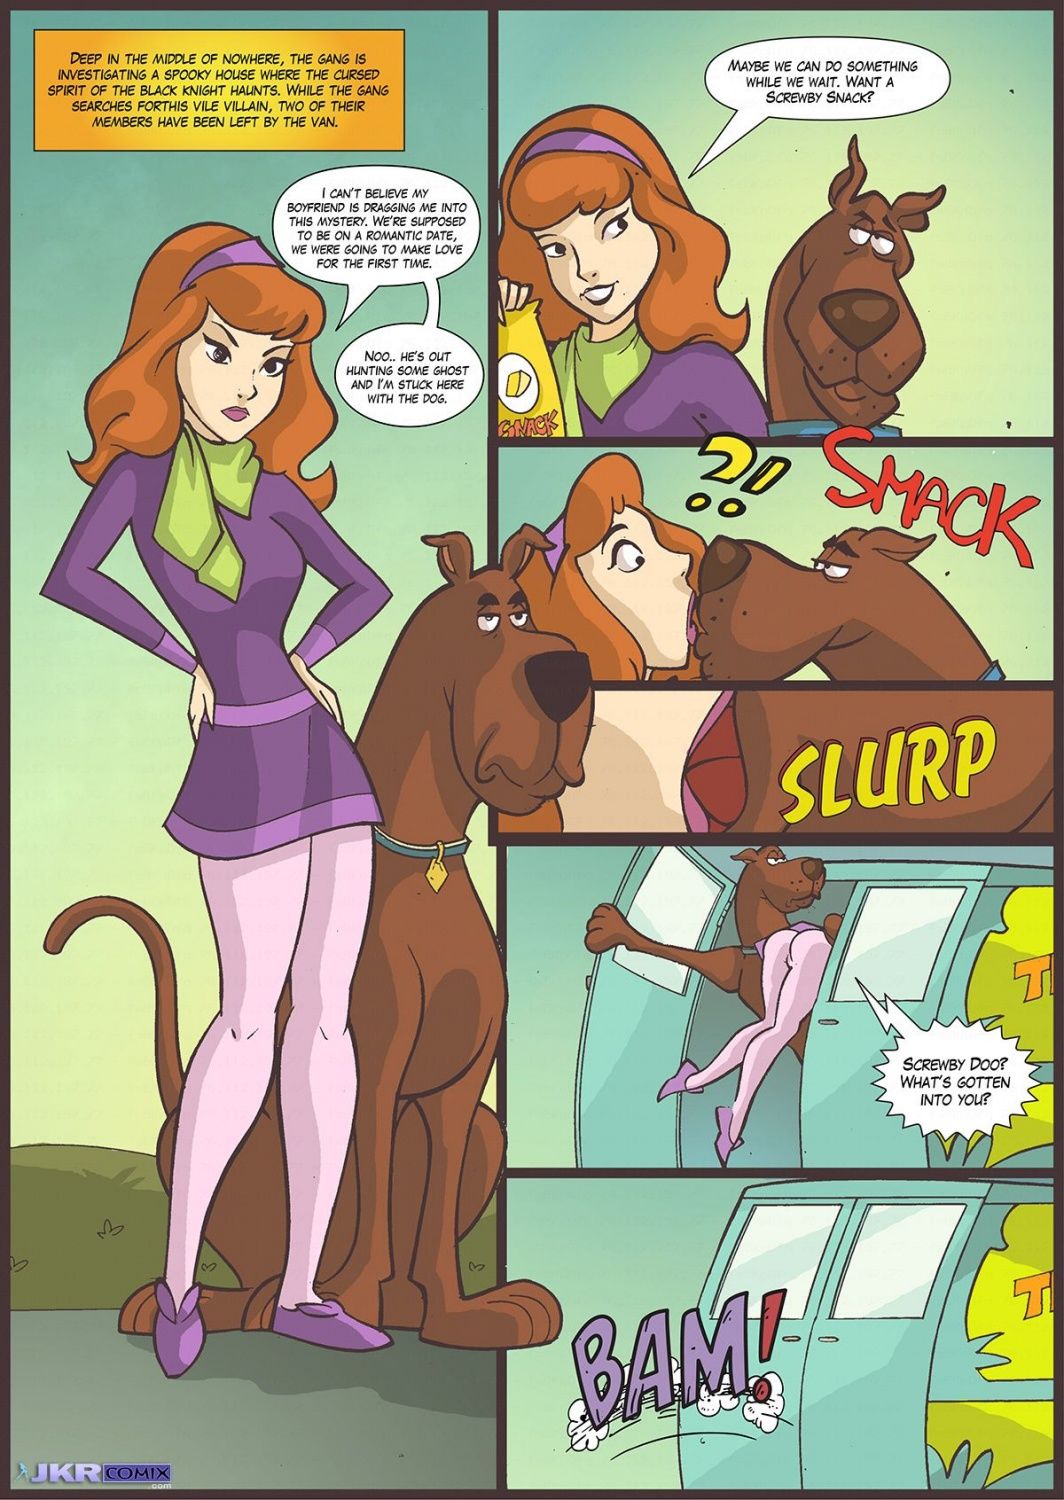 JKRComix - Screwby Doo, Scooby Cartoon page 2